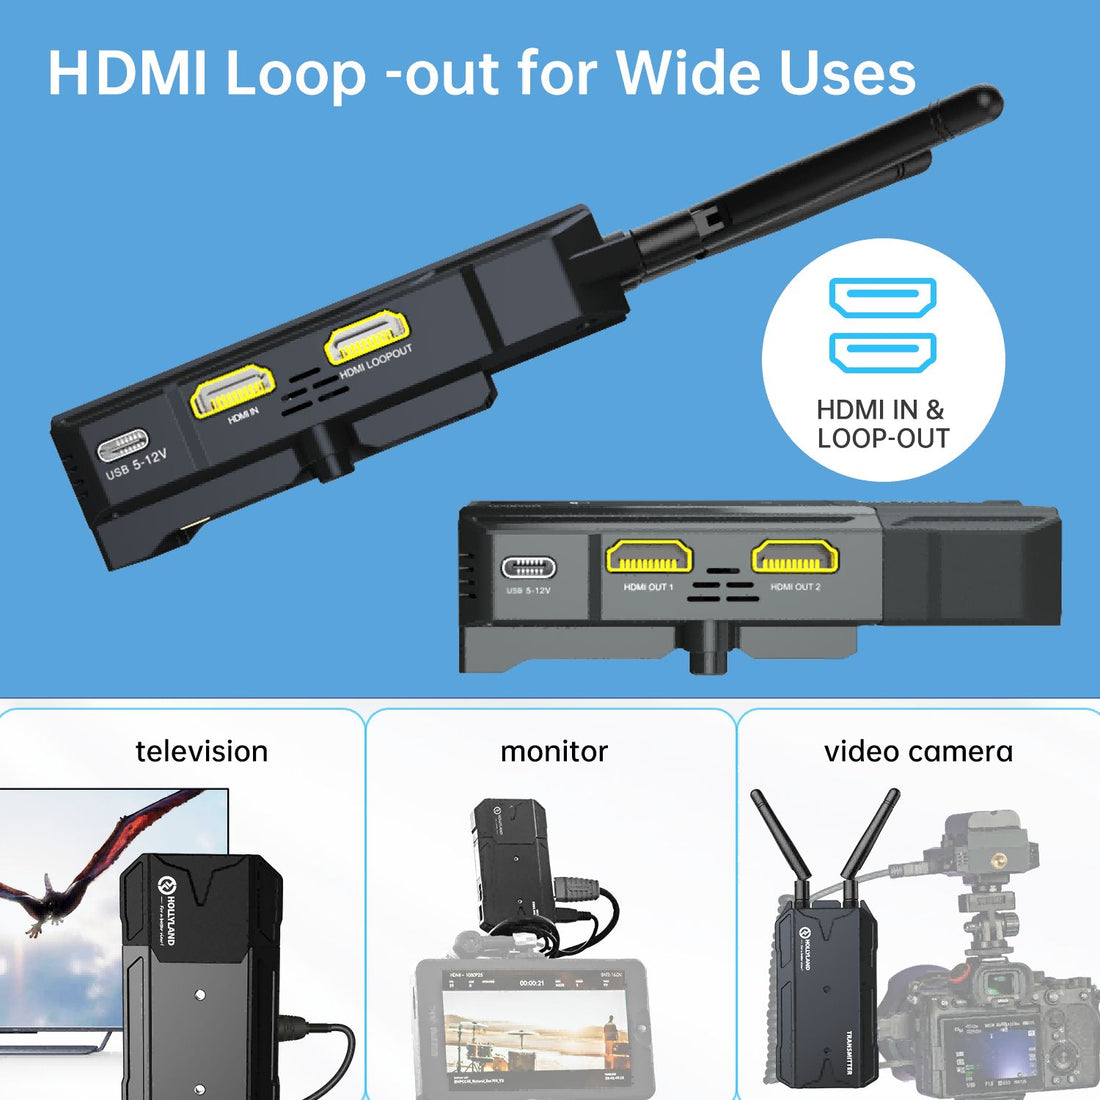 Hollyland Mars 300 Pro Enhanced Dual HDMI Wireless Video Transmission System